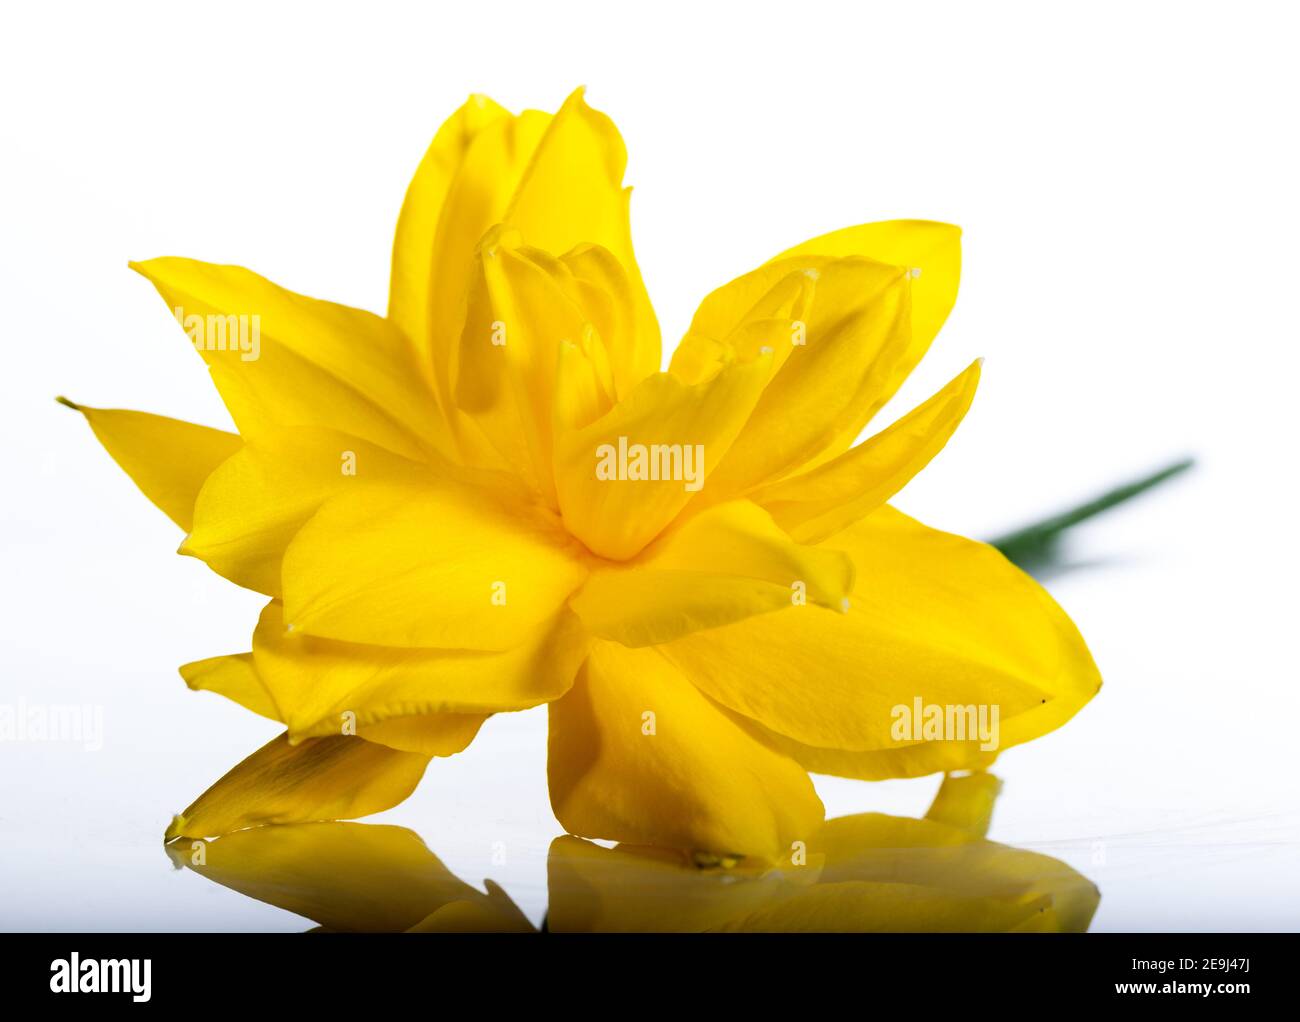 'Golden Ducat' Daffodil, Påsklilja (Narcissus pseudonarcissus) Stock Photo